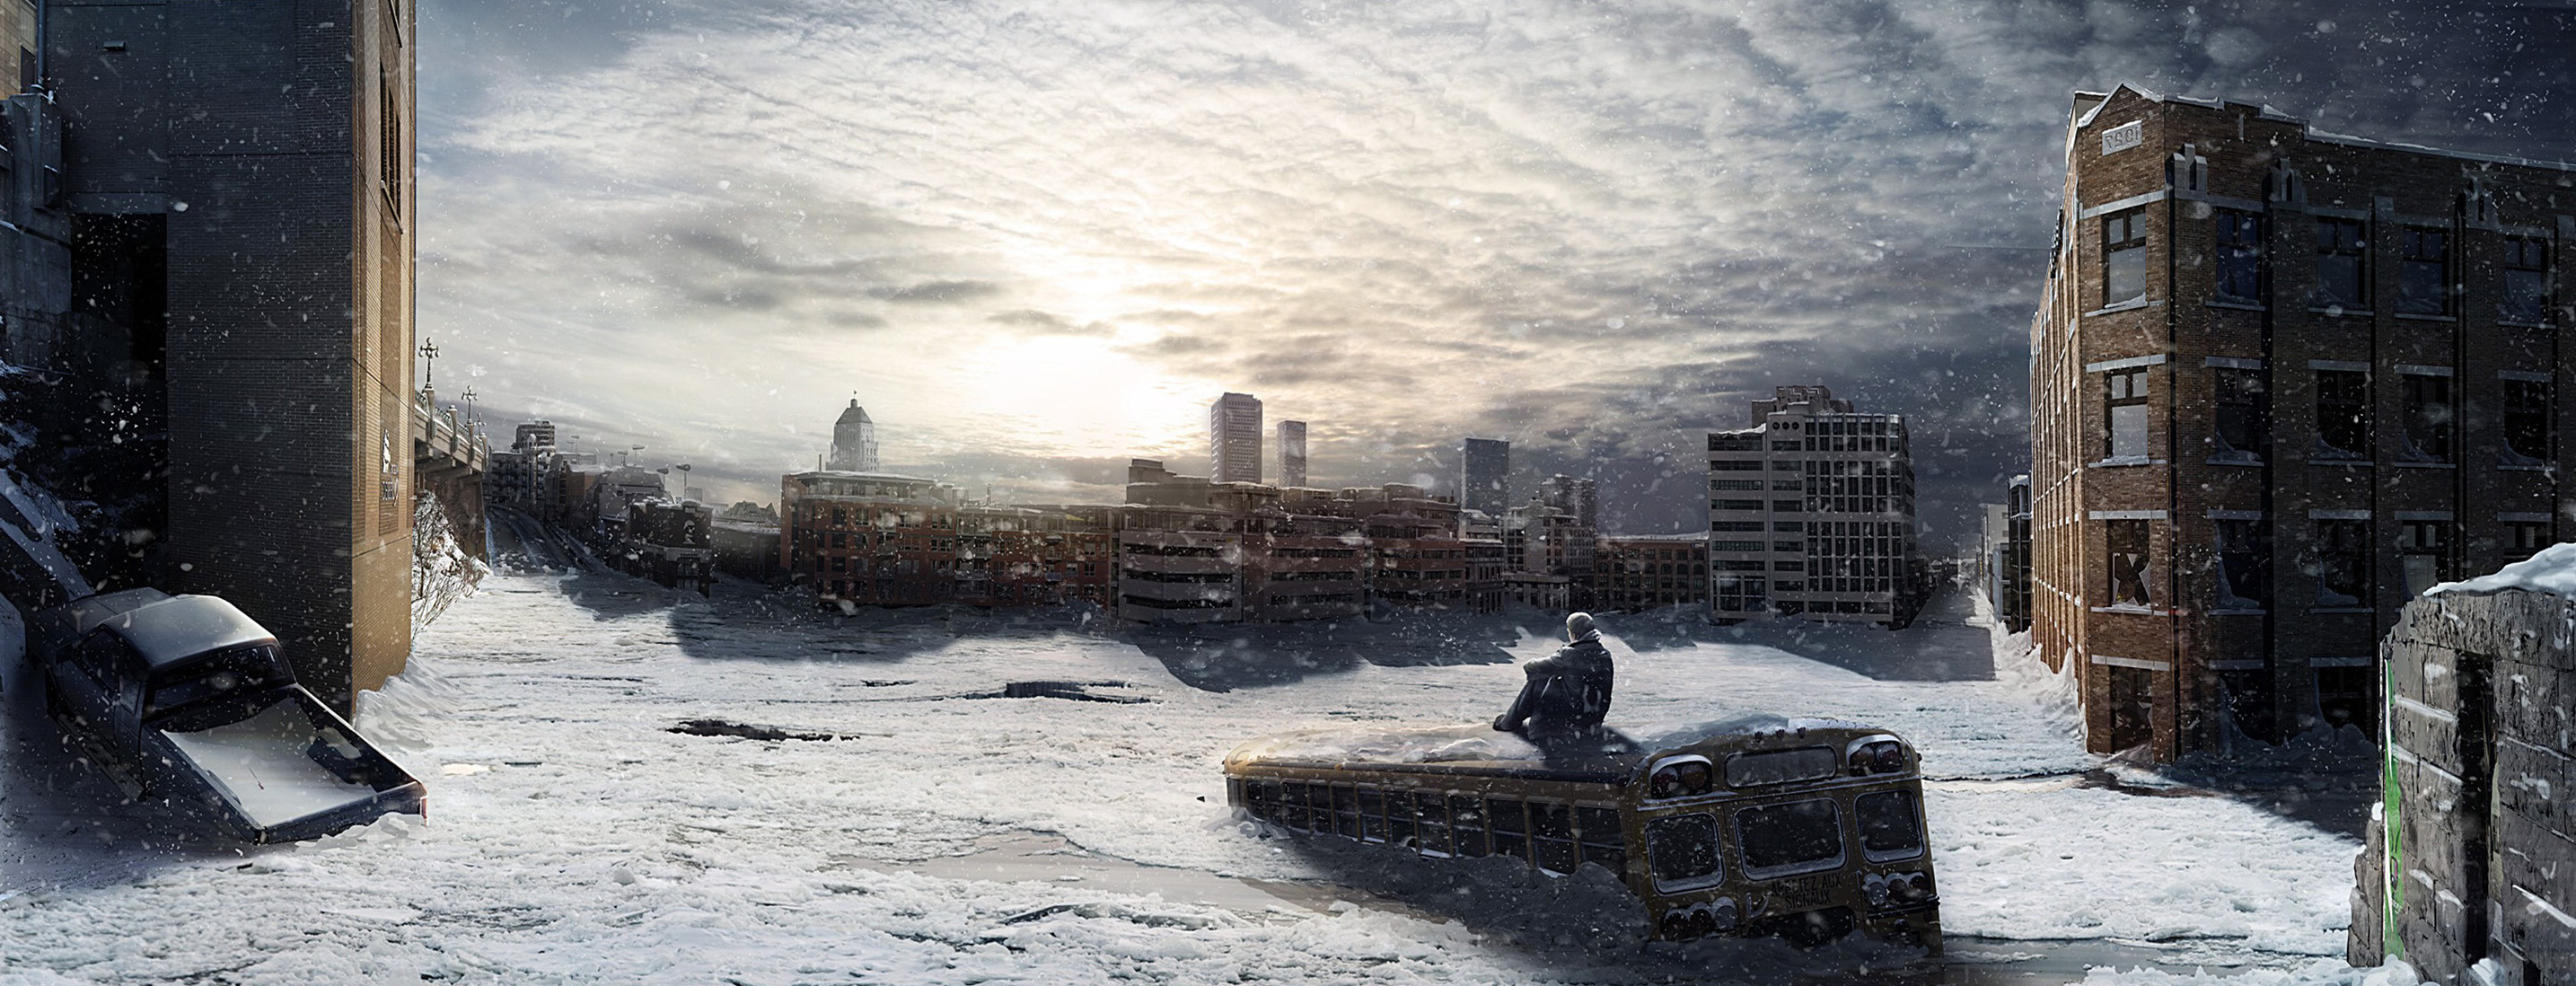 Winter City Digital Art Wallpapers